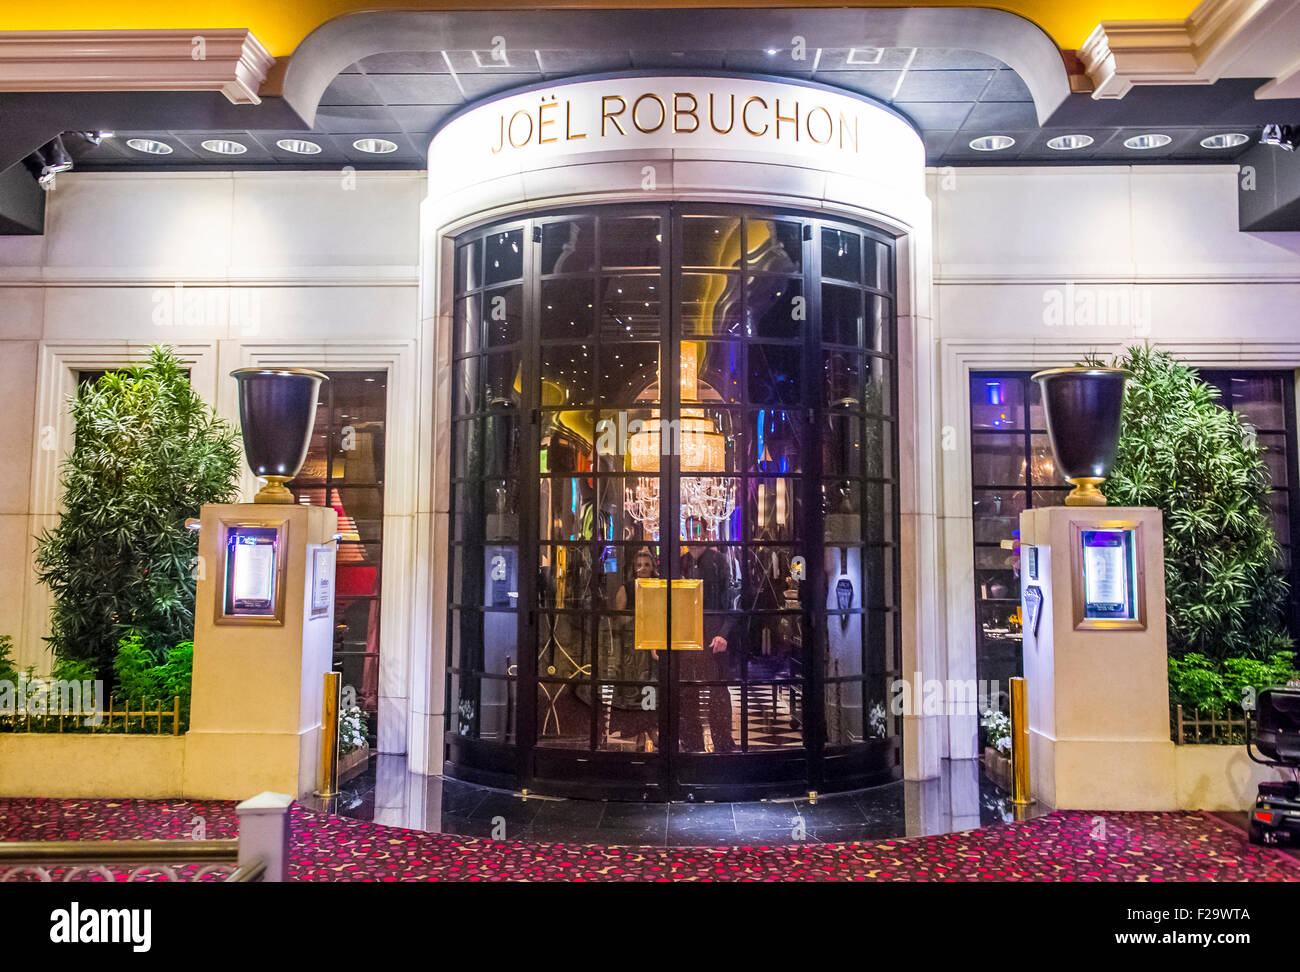 The Joel Robuchon restaurant in MGM hotel in Las Vegas Stock Photo - Alamy